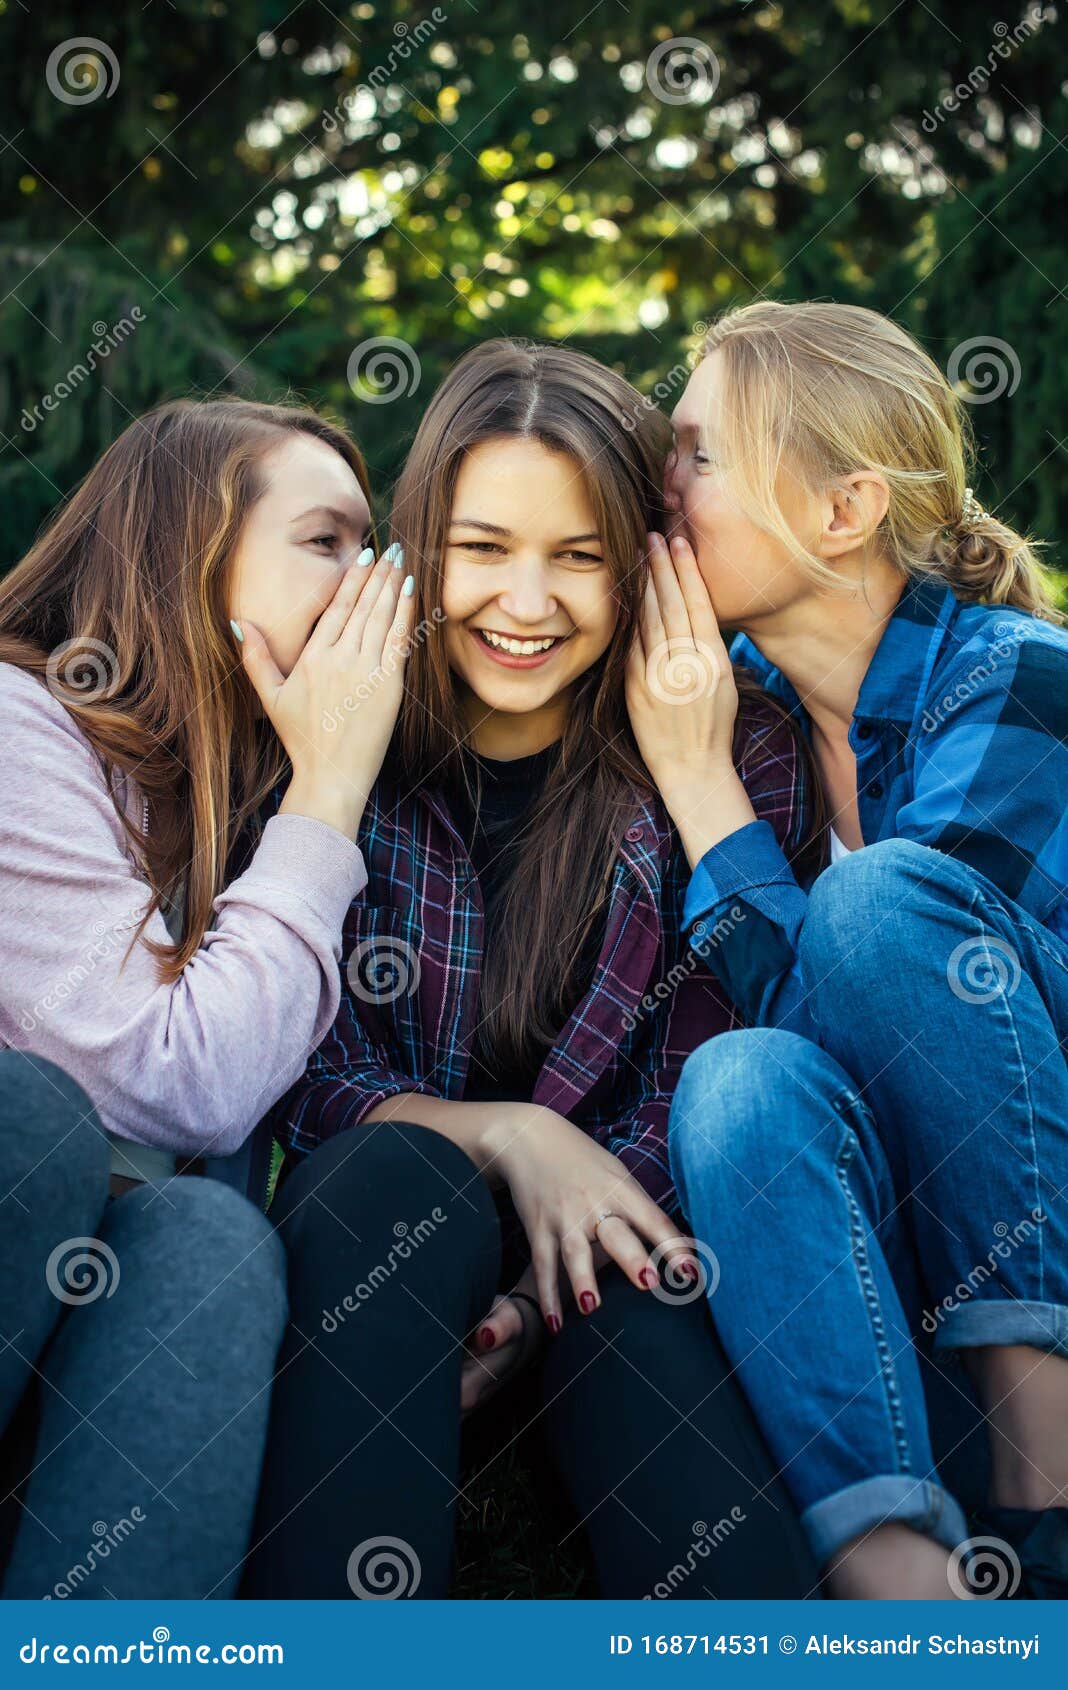 three-cheerful-girls-whisper-gossip-against-green-foliage-park-women-joke-laugh-vertical-image-three-cheerful-girls-168714531.jpg